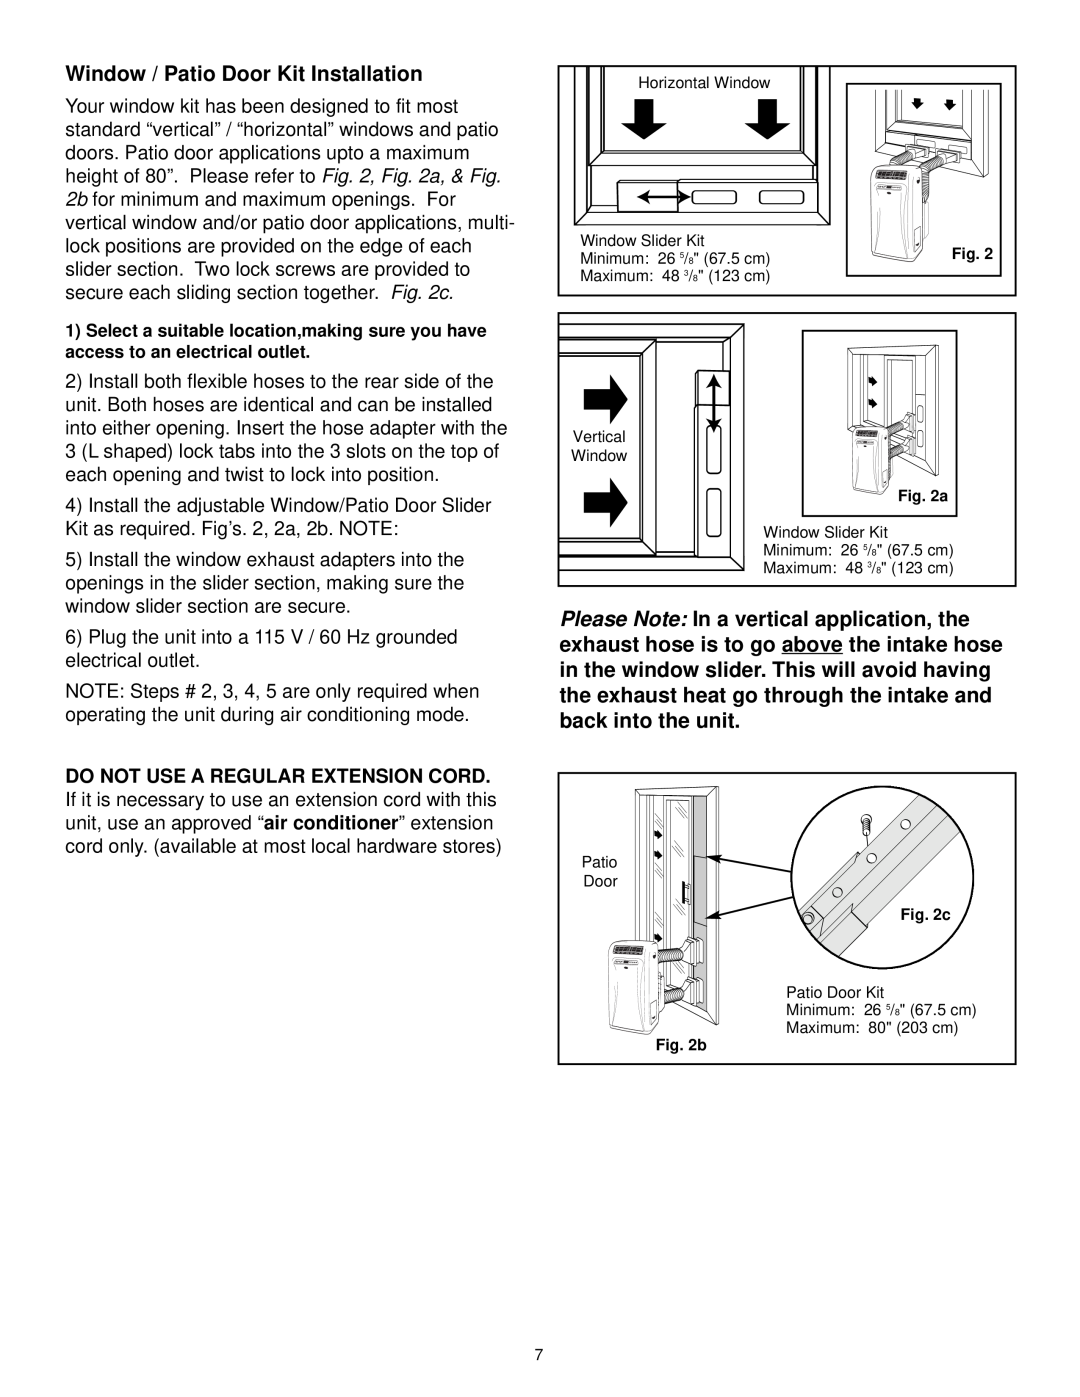 Danby DPAC9030, DCAP 12030 manual Window / Patio Door Kit Installation 